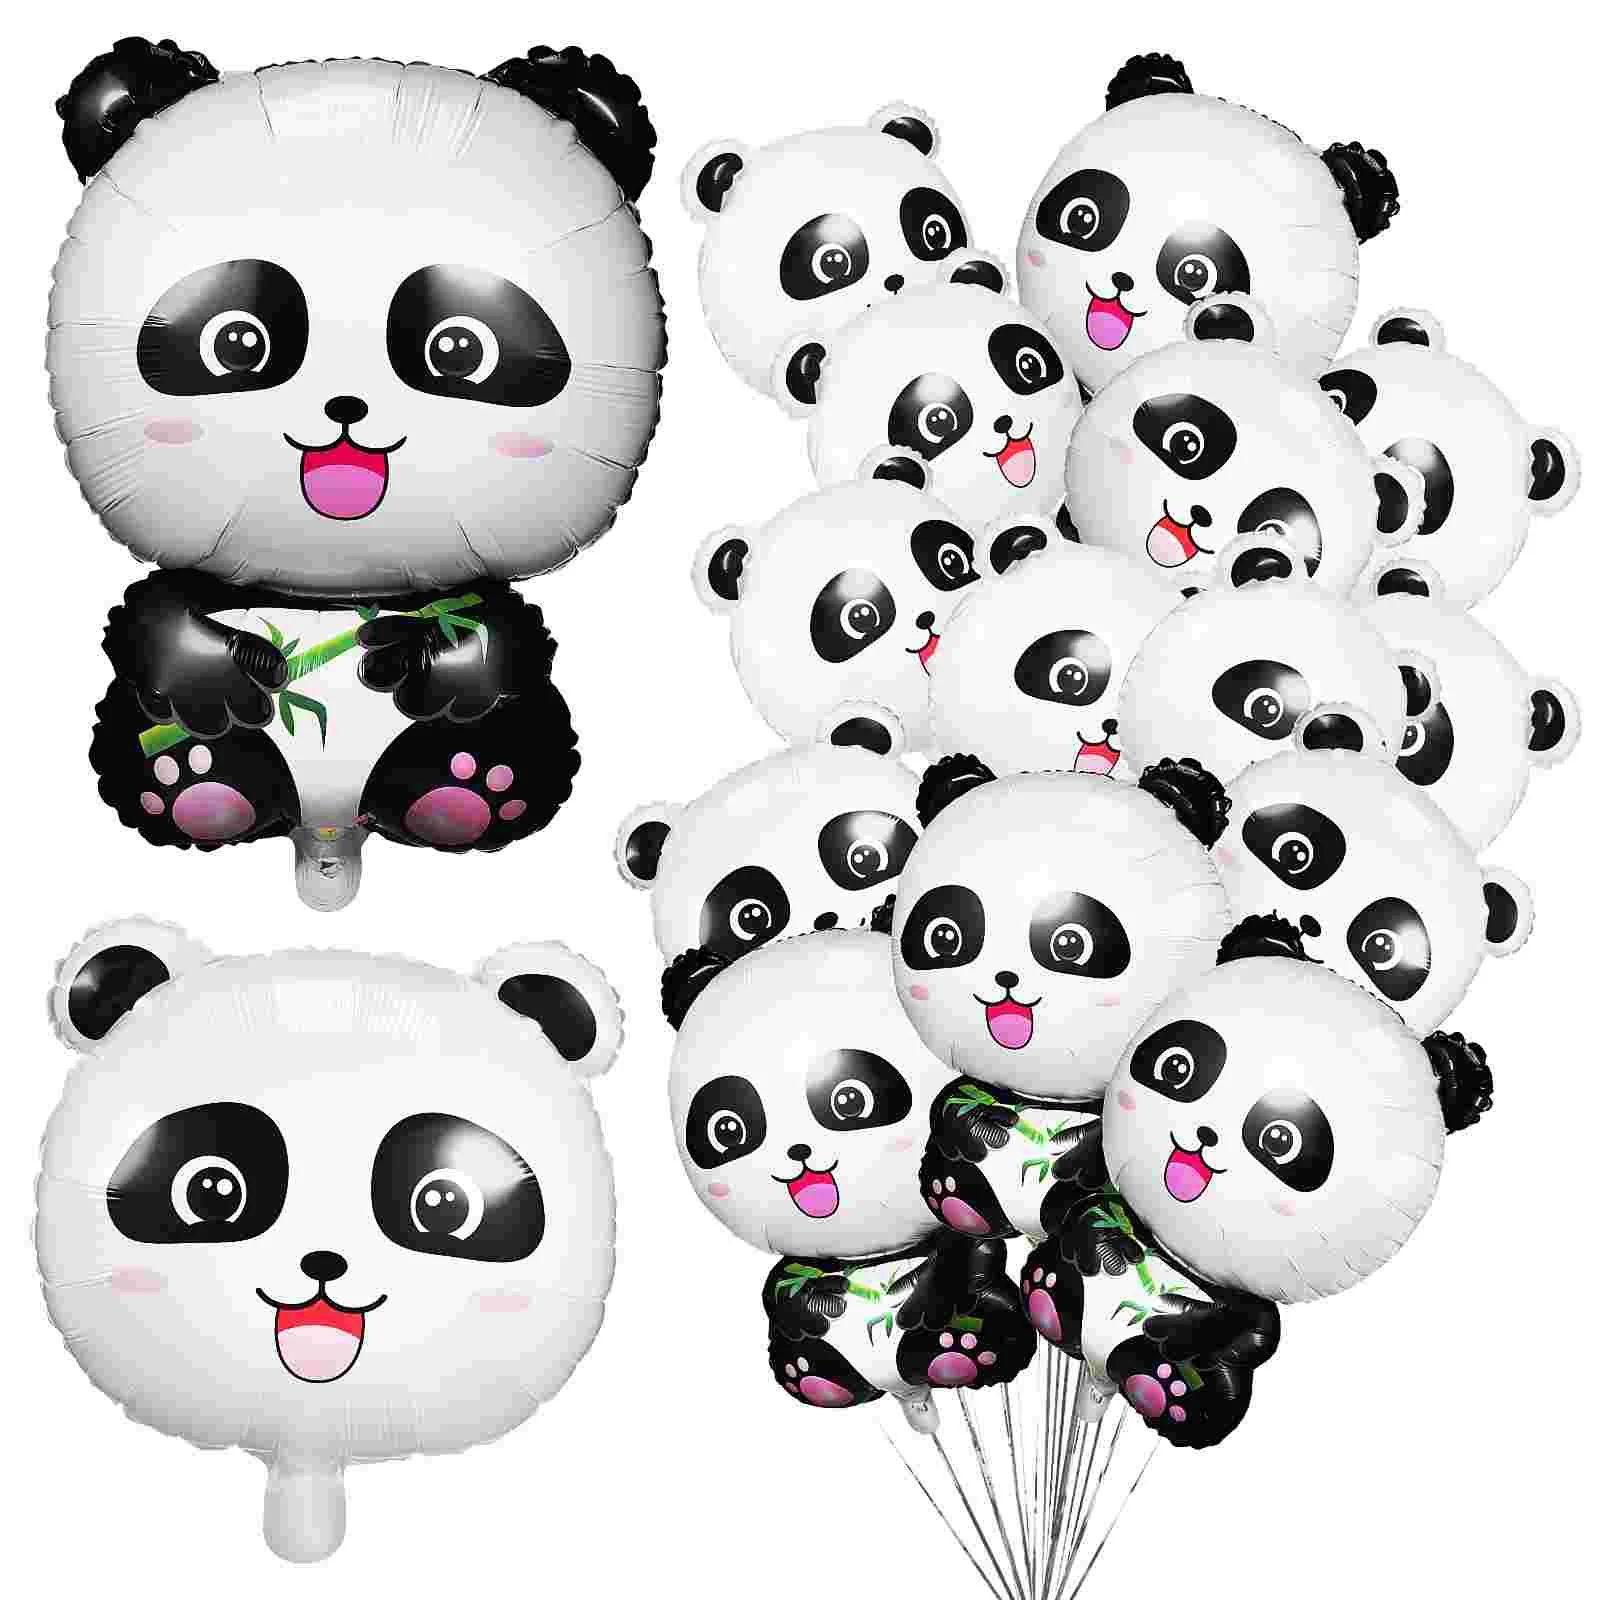 

15Pcs Panda Balloons Cartoon Panda Shaped Aluminium Foil Balloons for Animals Theme Birthday Party Decors